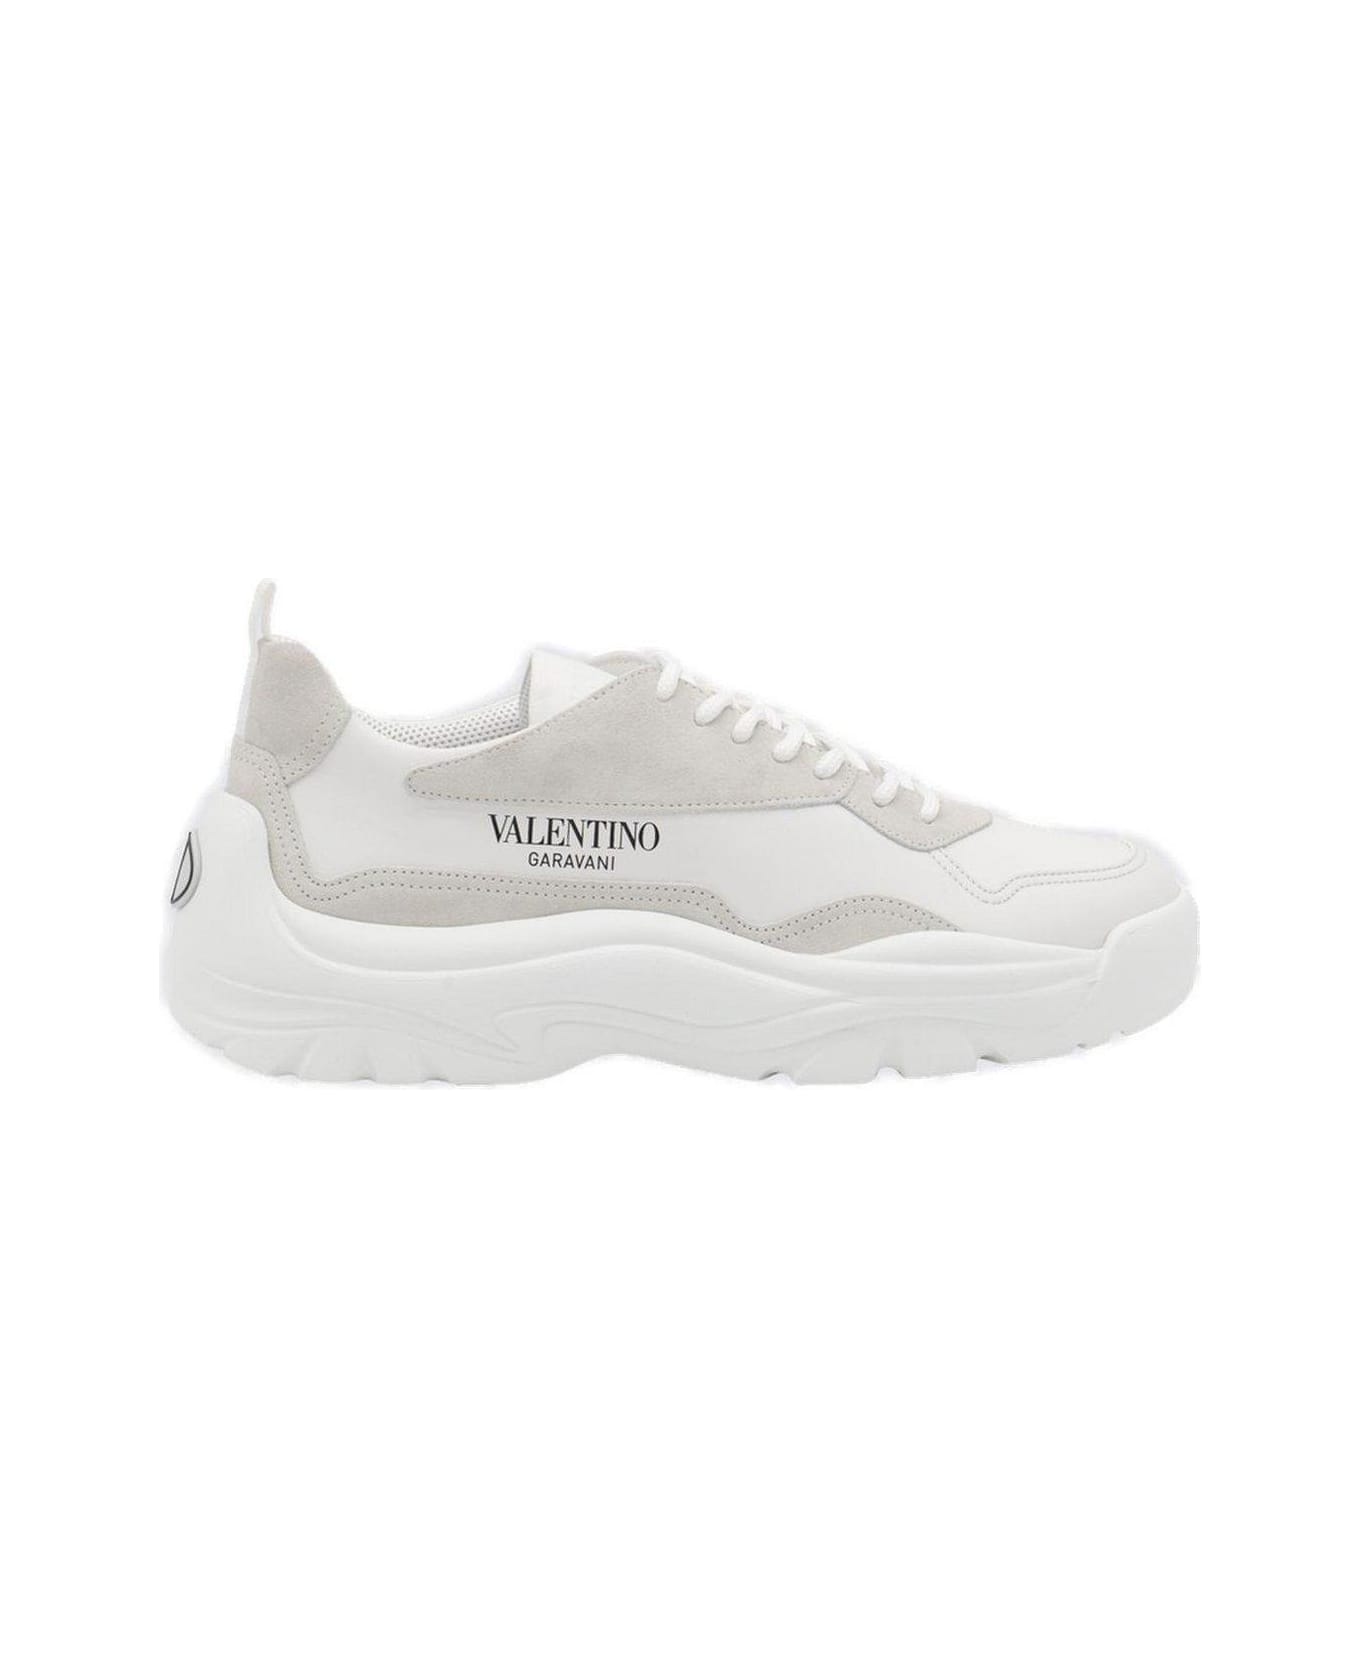 Valentino Garavani Gumboy Lace-up Sneakers - White